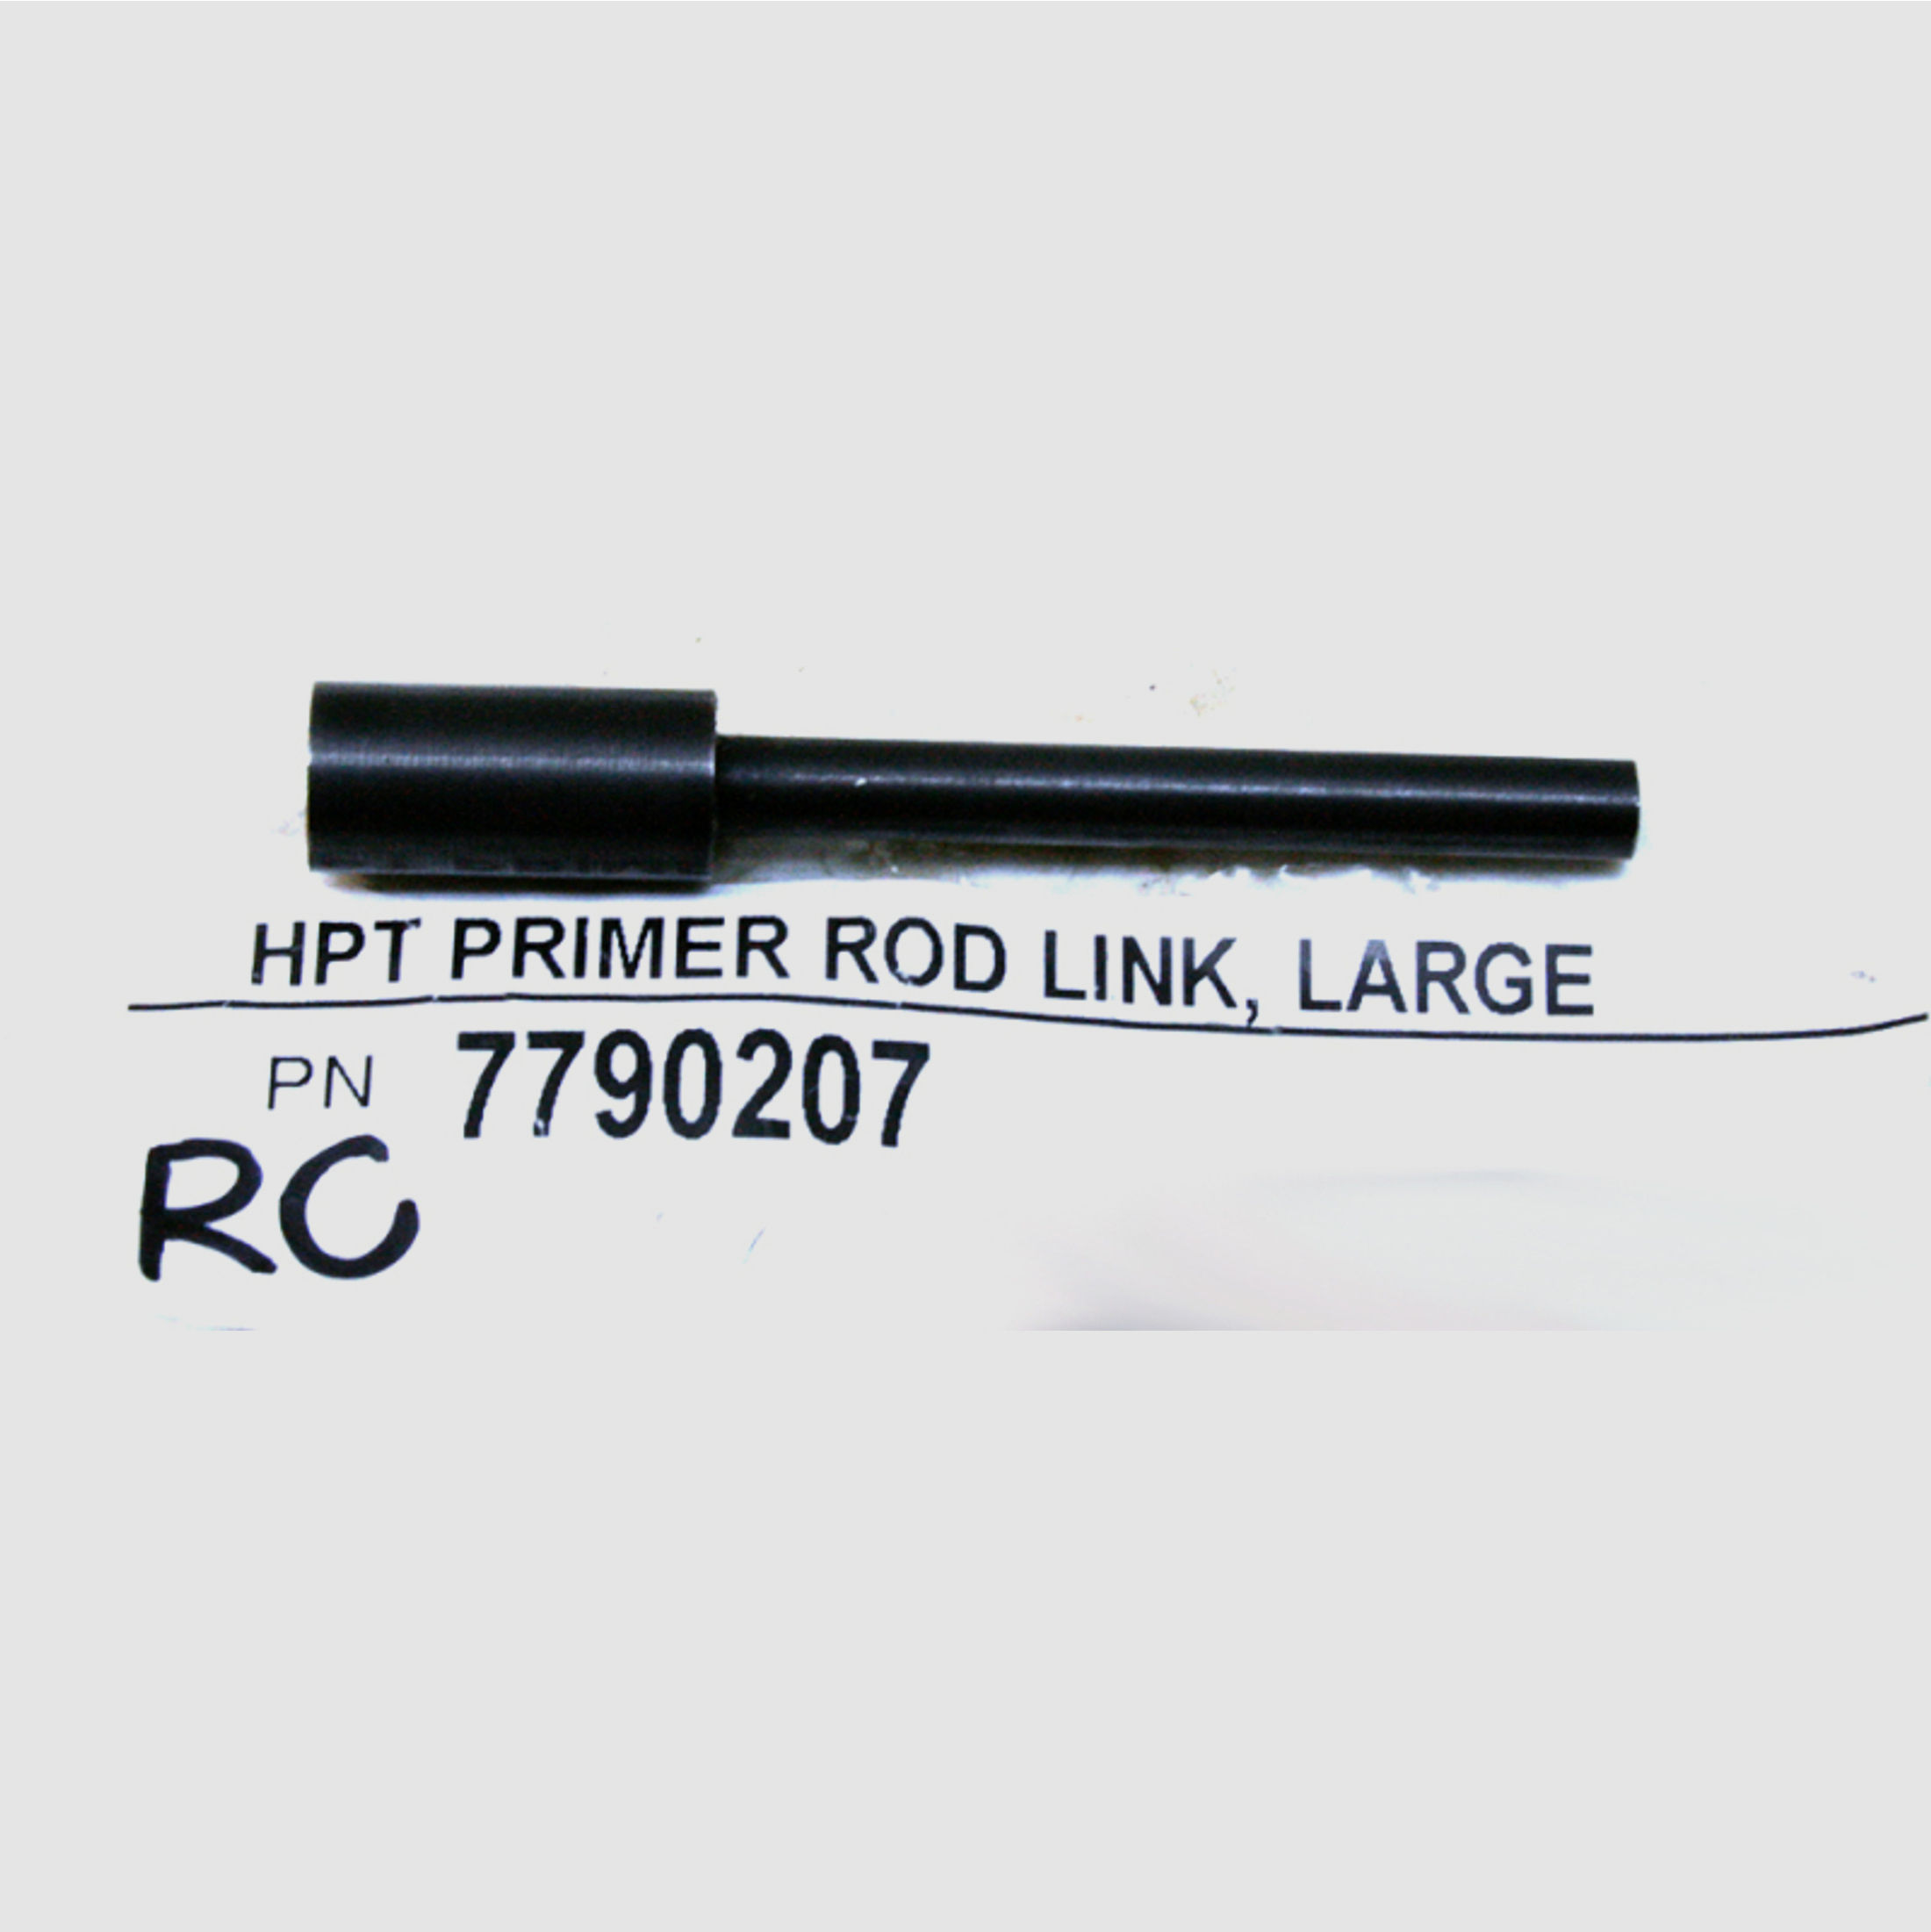 RCBS 7790207 Primer Rod Large für Universal Hand Priming Tool #90200 - Setzstempel groß für Zünder